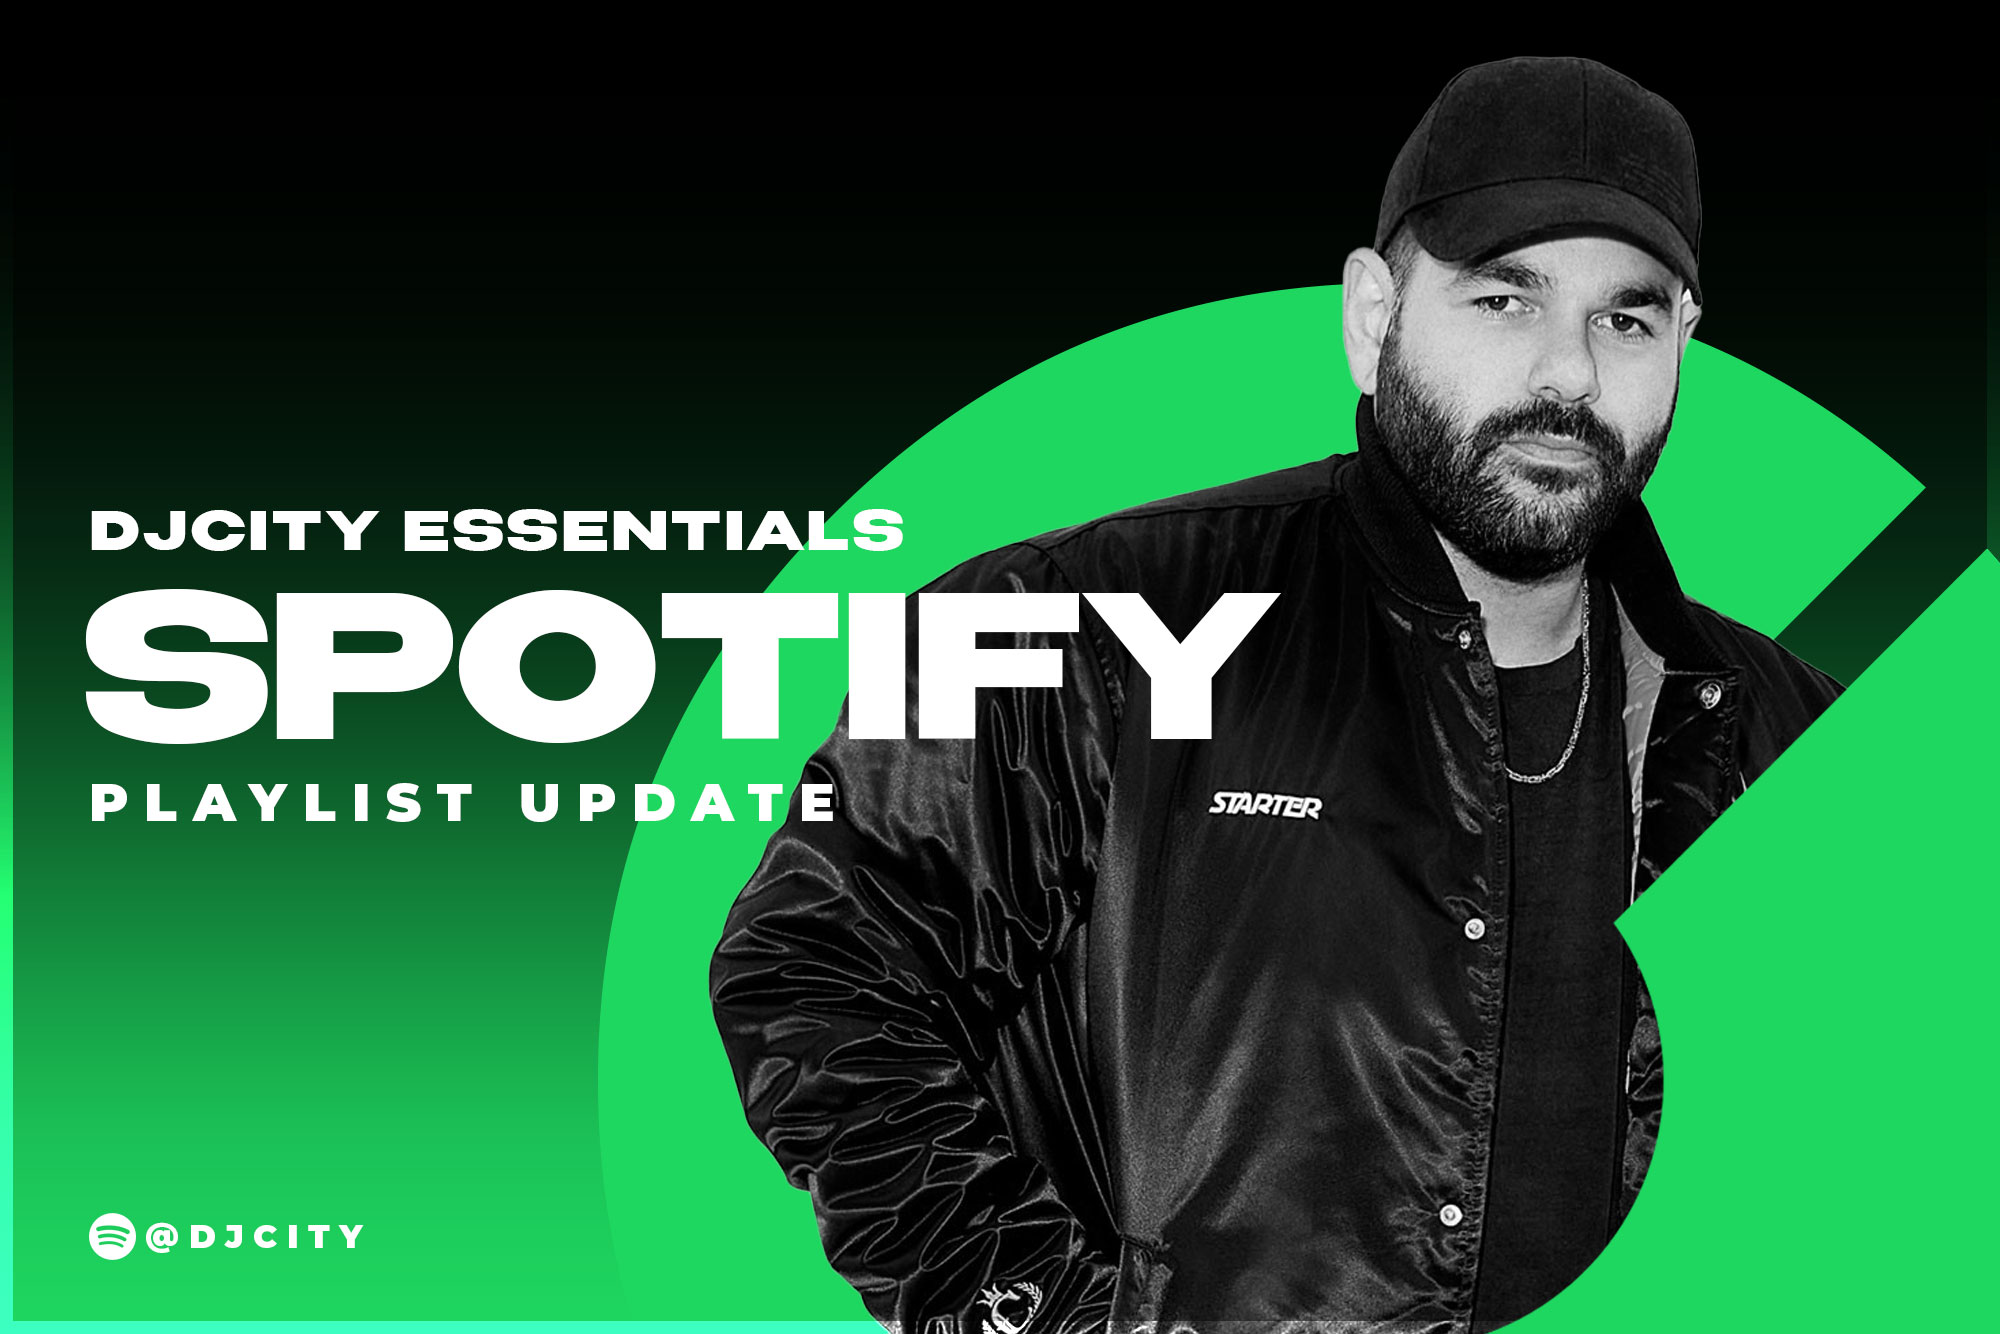 DJcity’s Spotify Playlist Update: Jul. 13